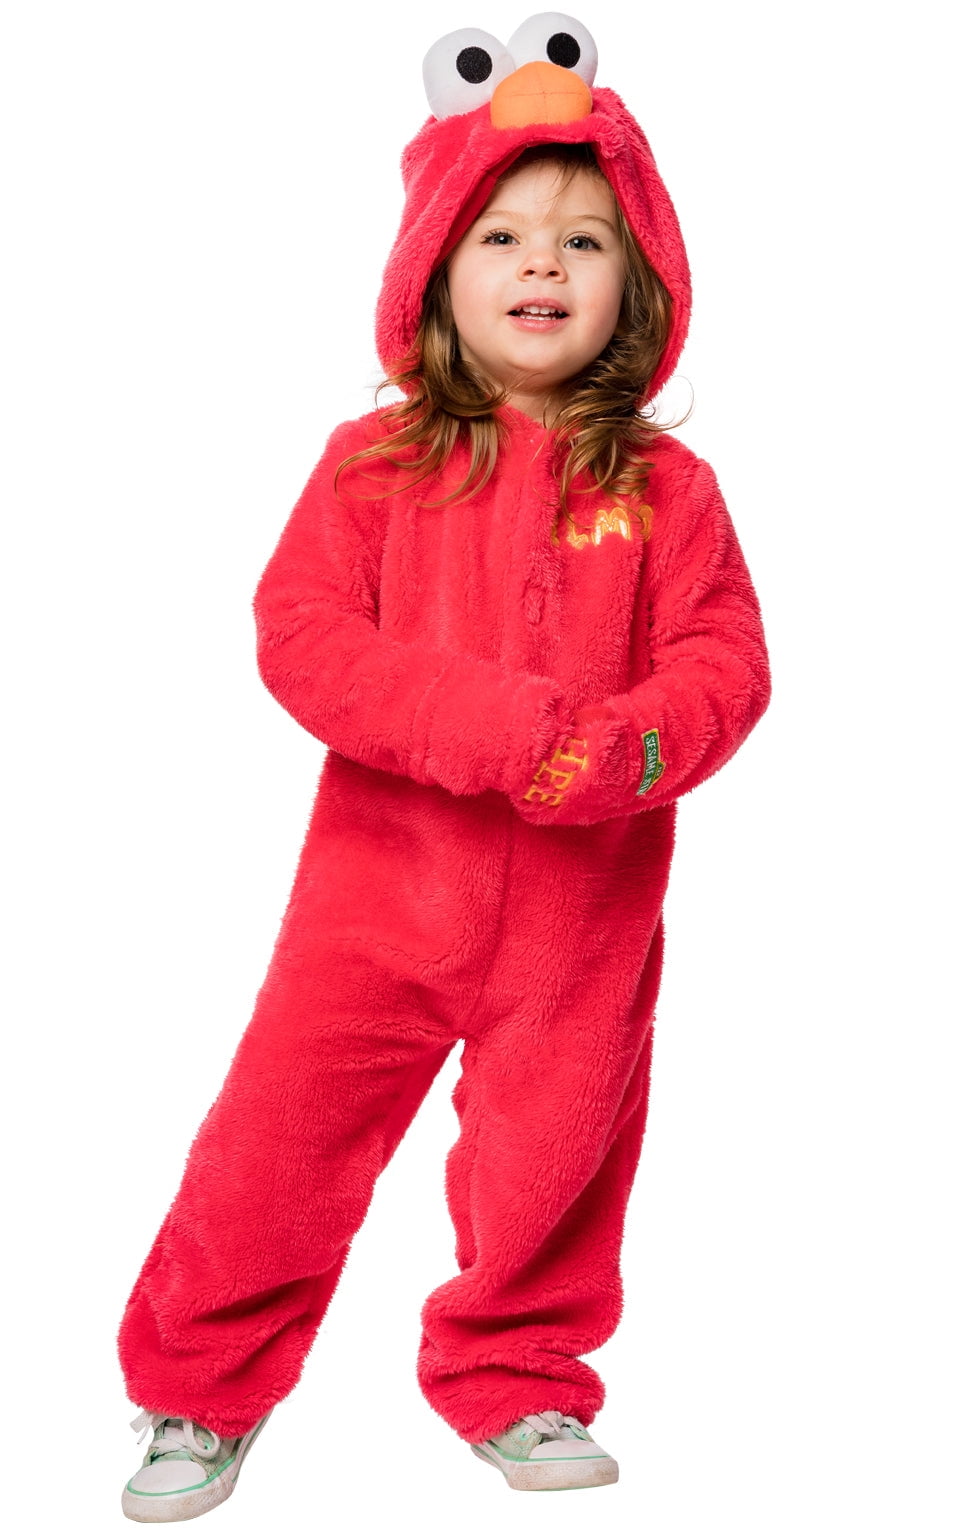 Sesame Street Toddler Costume - Walmart.com